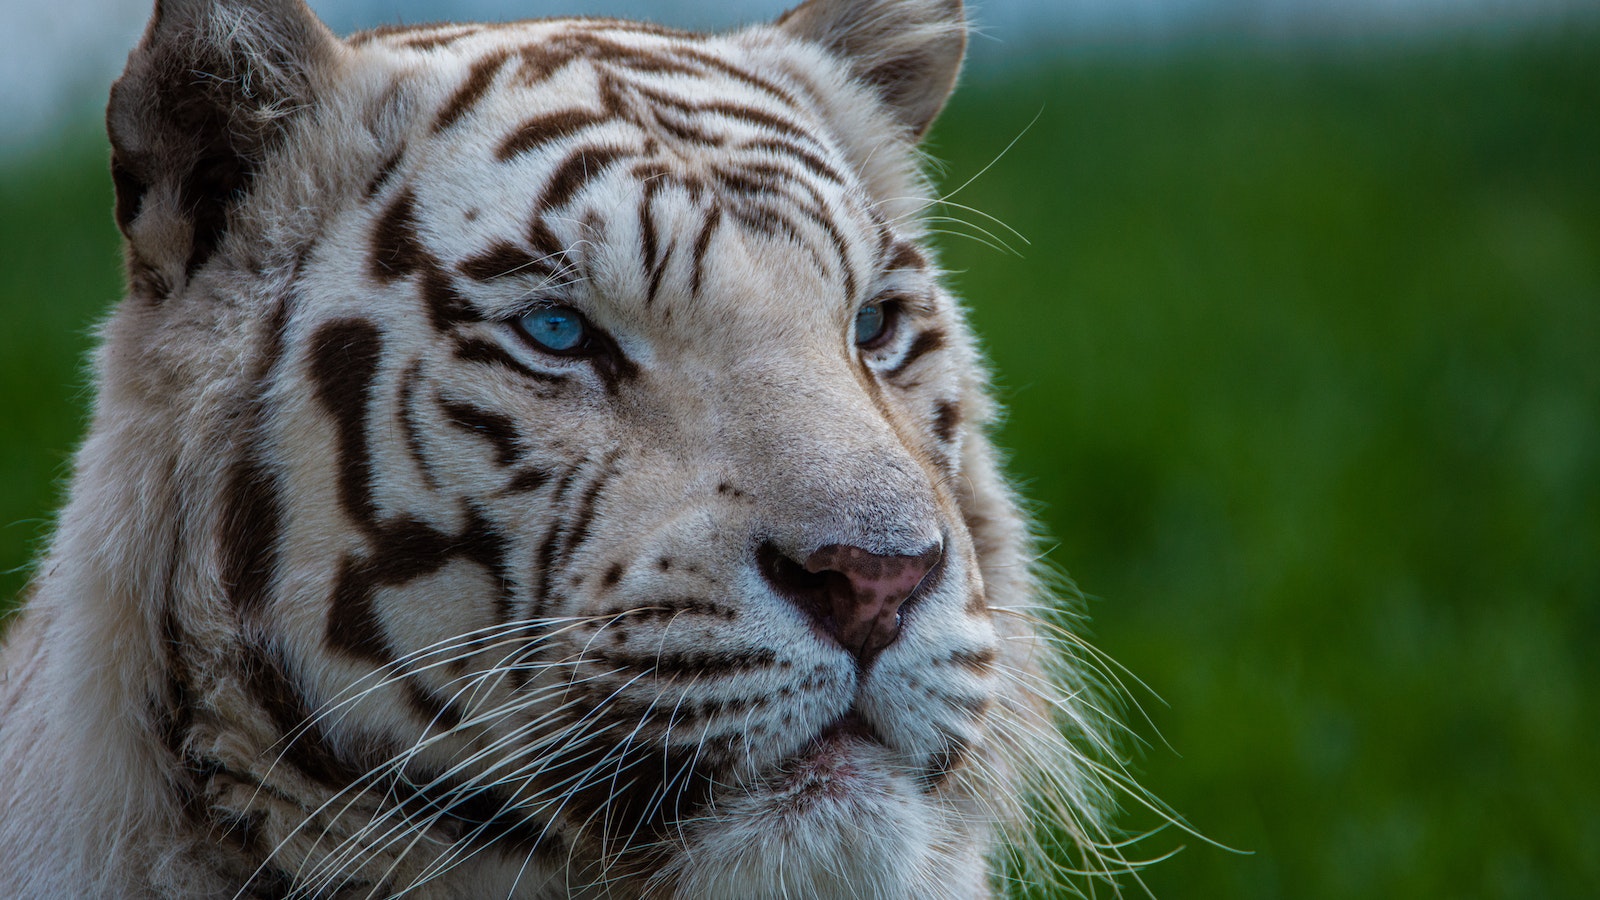 Close Up Photo of a Tiger